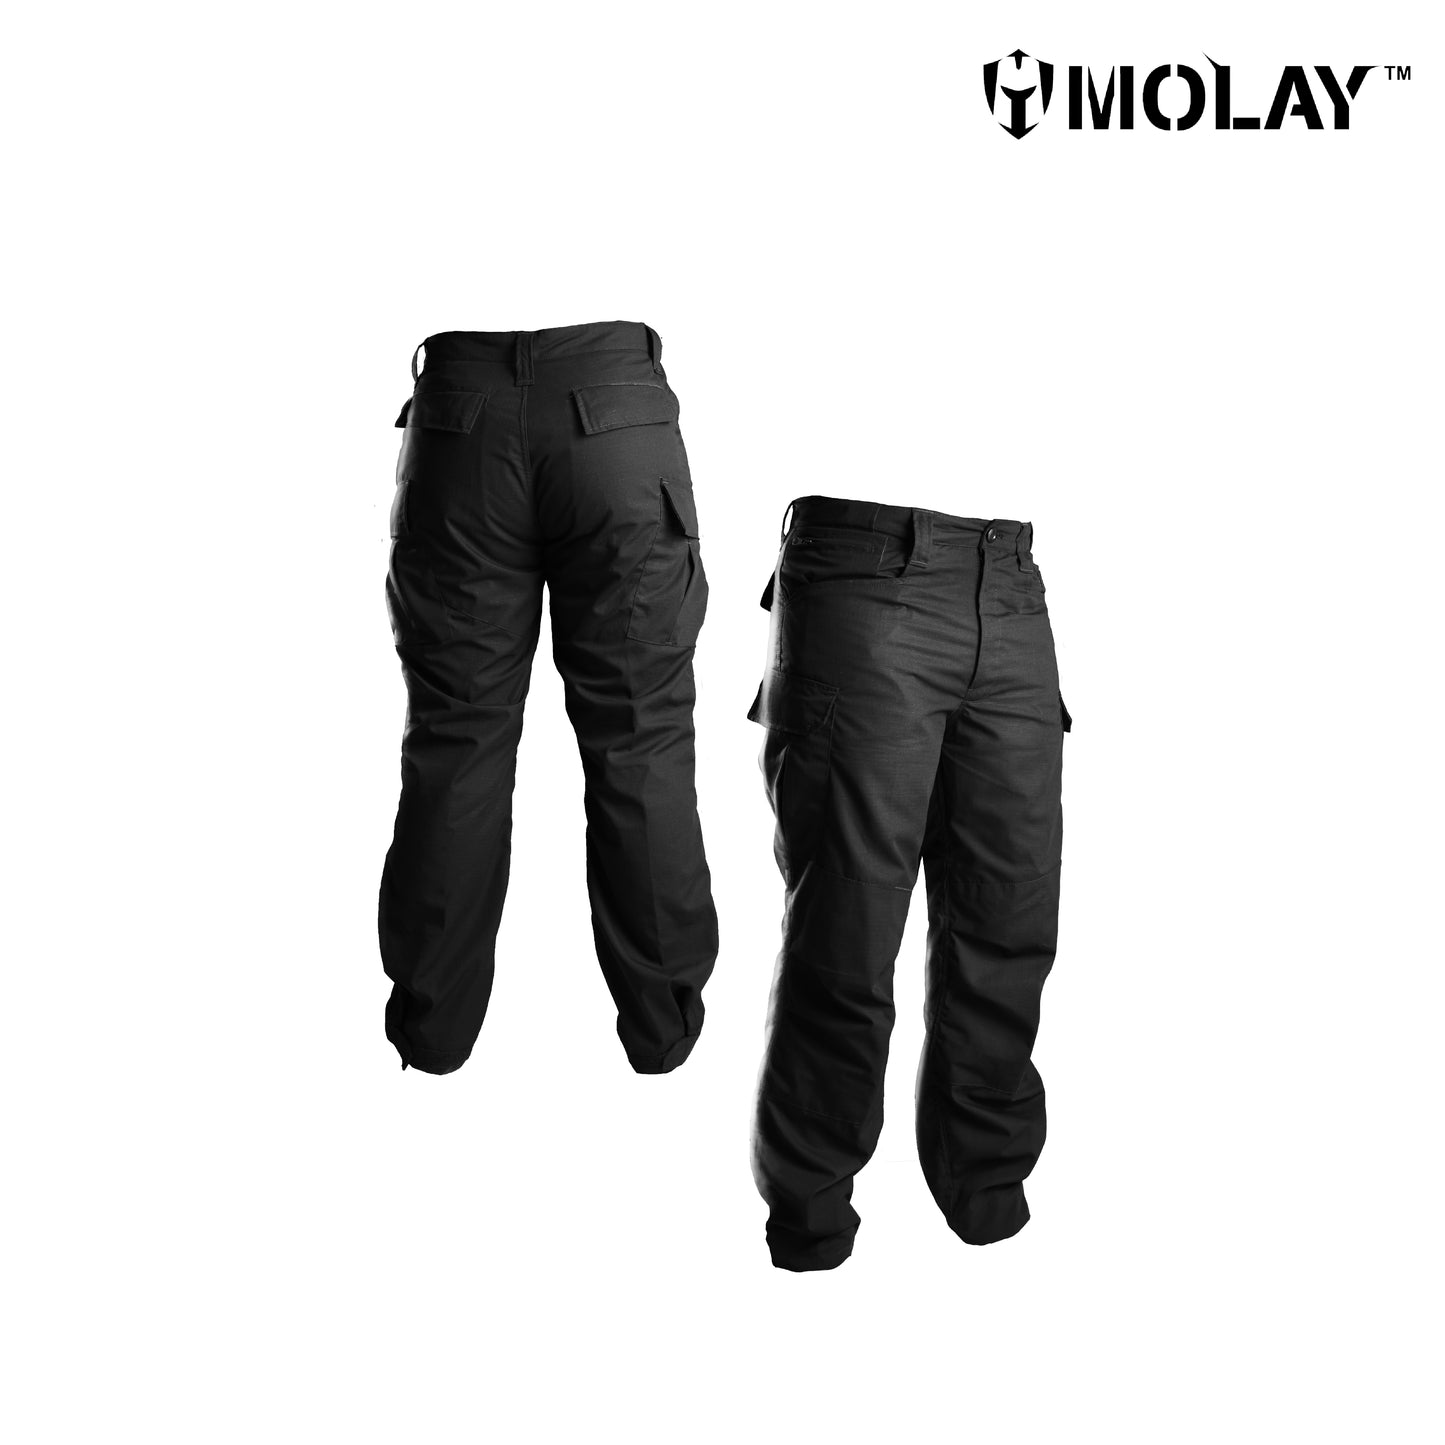 Molay® Peacekeeping Uniform Pant